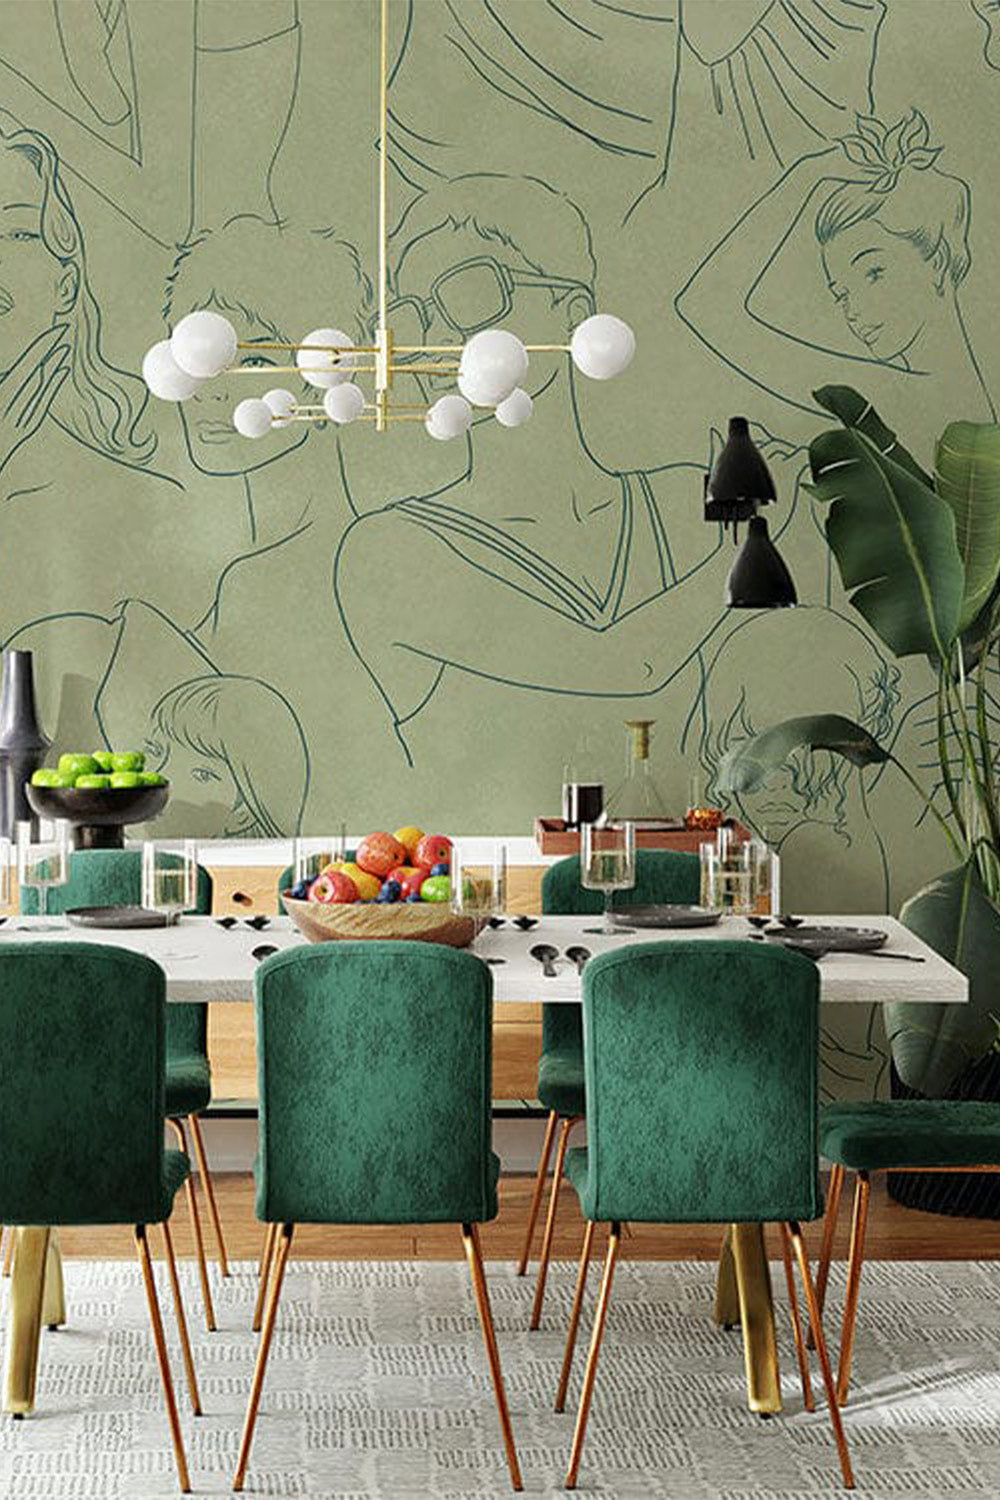 Restaurant wallpaper Vectors & Illustrations for Free Download | Freepik